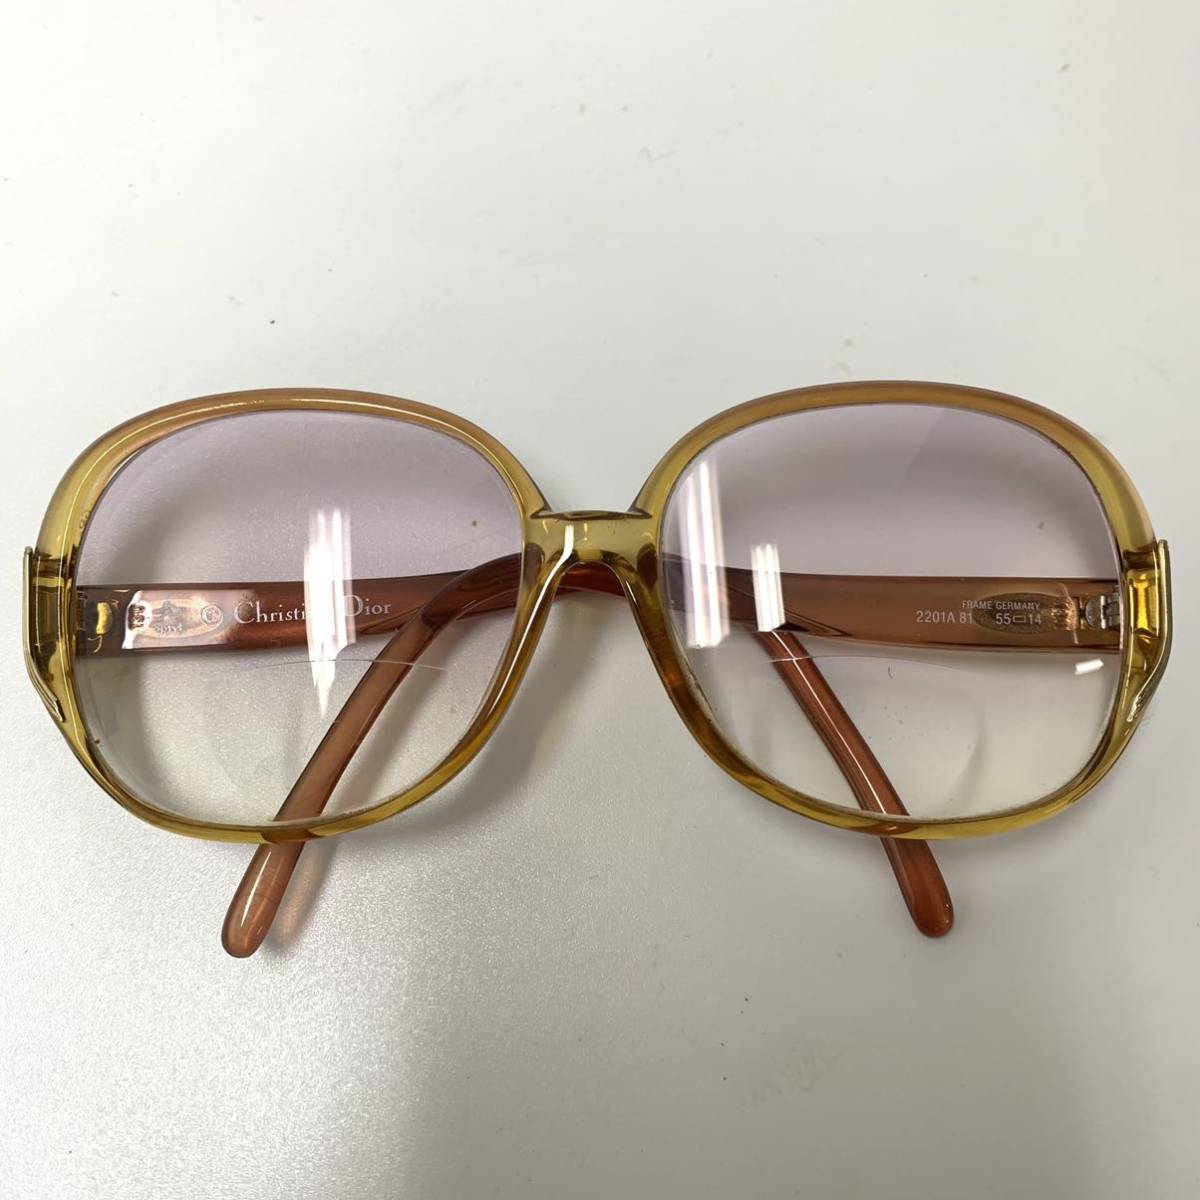 VINTAGE Christian Dior ドイツ製 眼鏡 メガネ 2201A81 optyl アイウェア 度入り クリスチャンディオール【レターパックプラス郵送可】#4